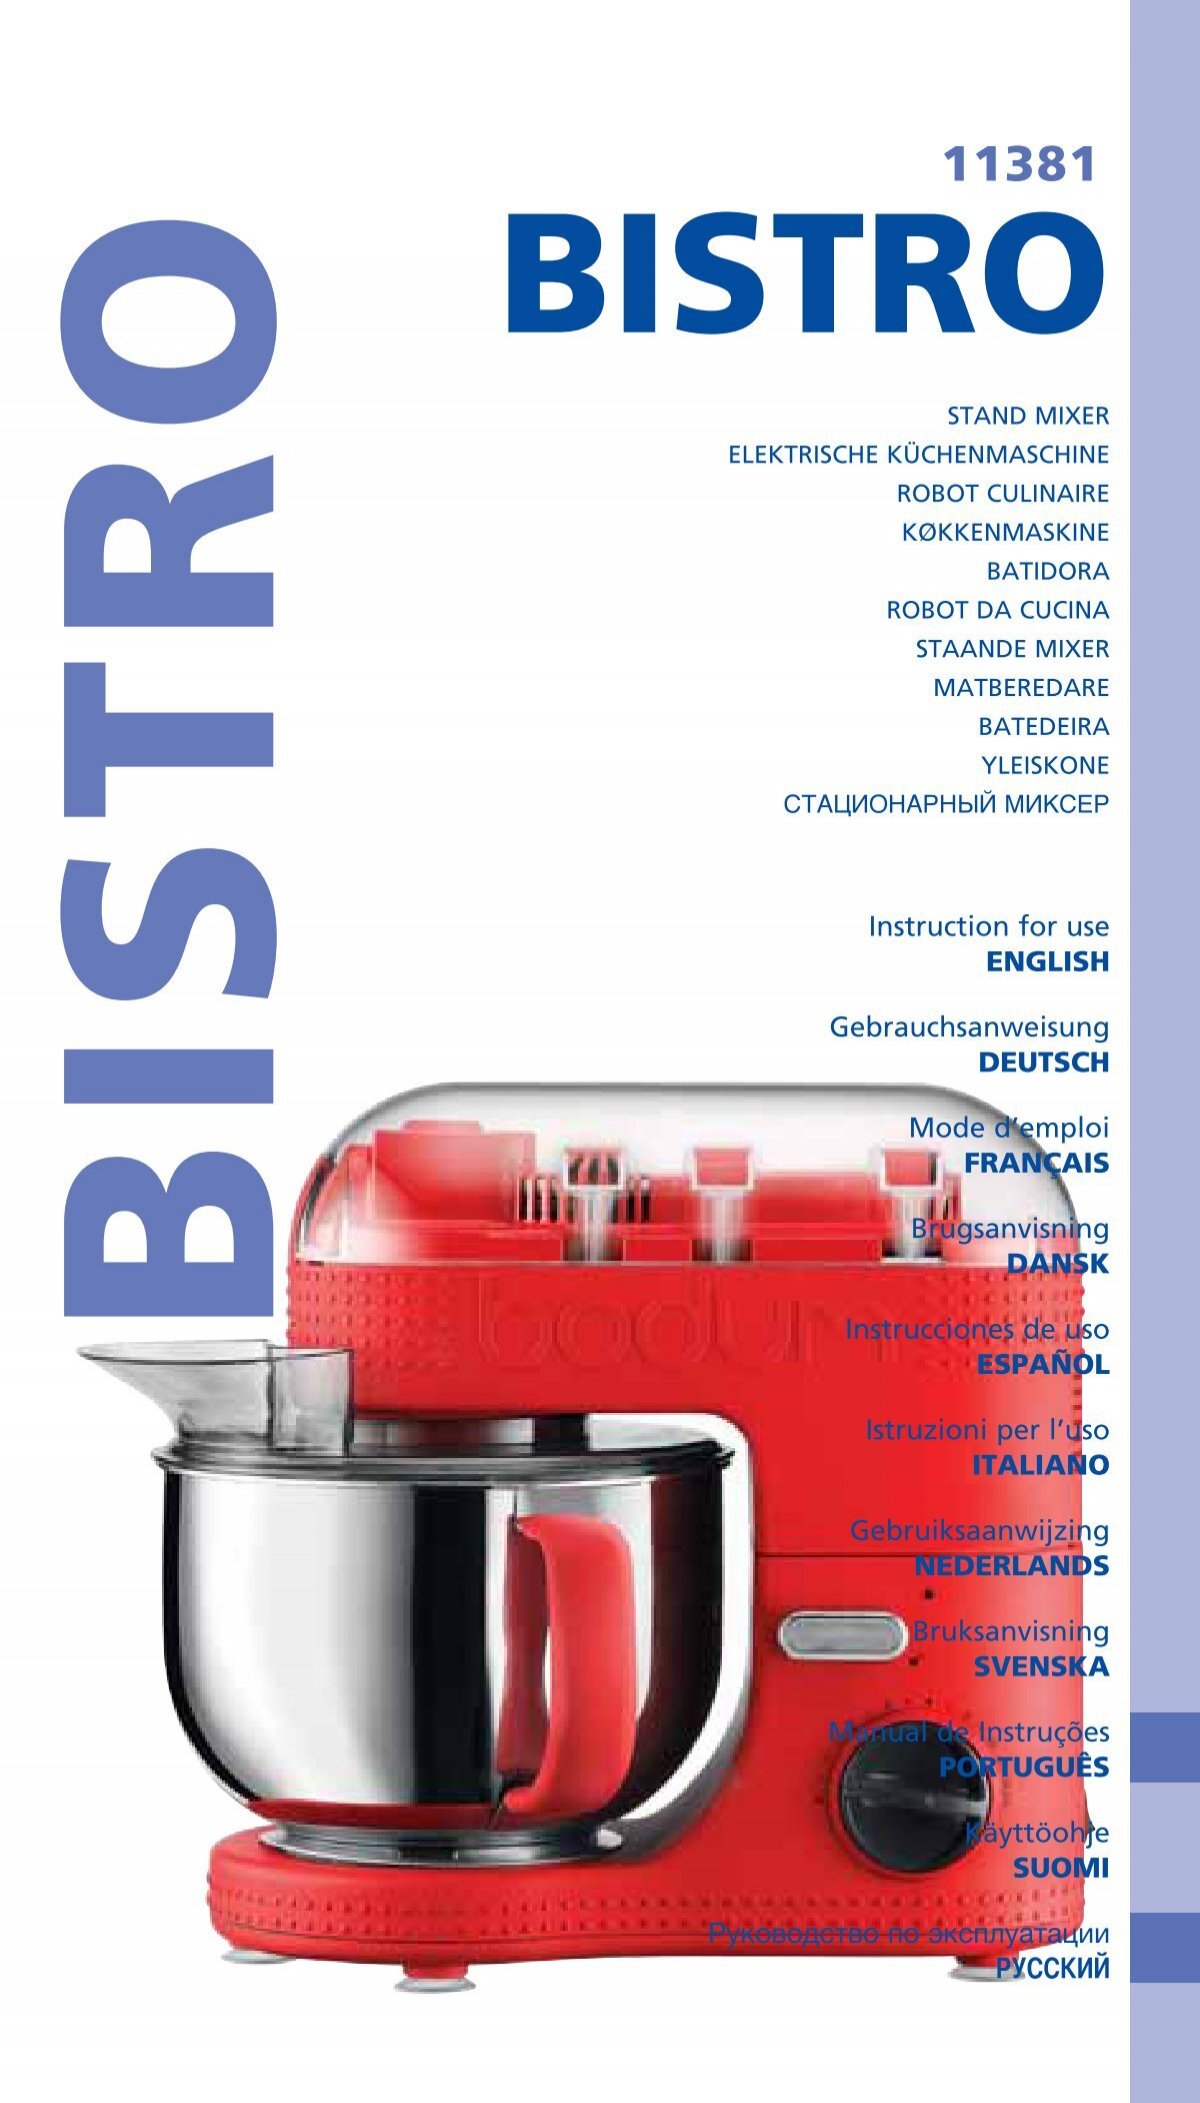 Bodum Bistro Electric Stand Mixer - Food Republic